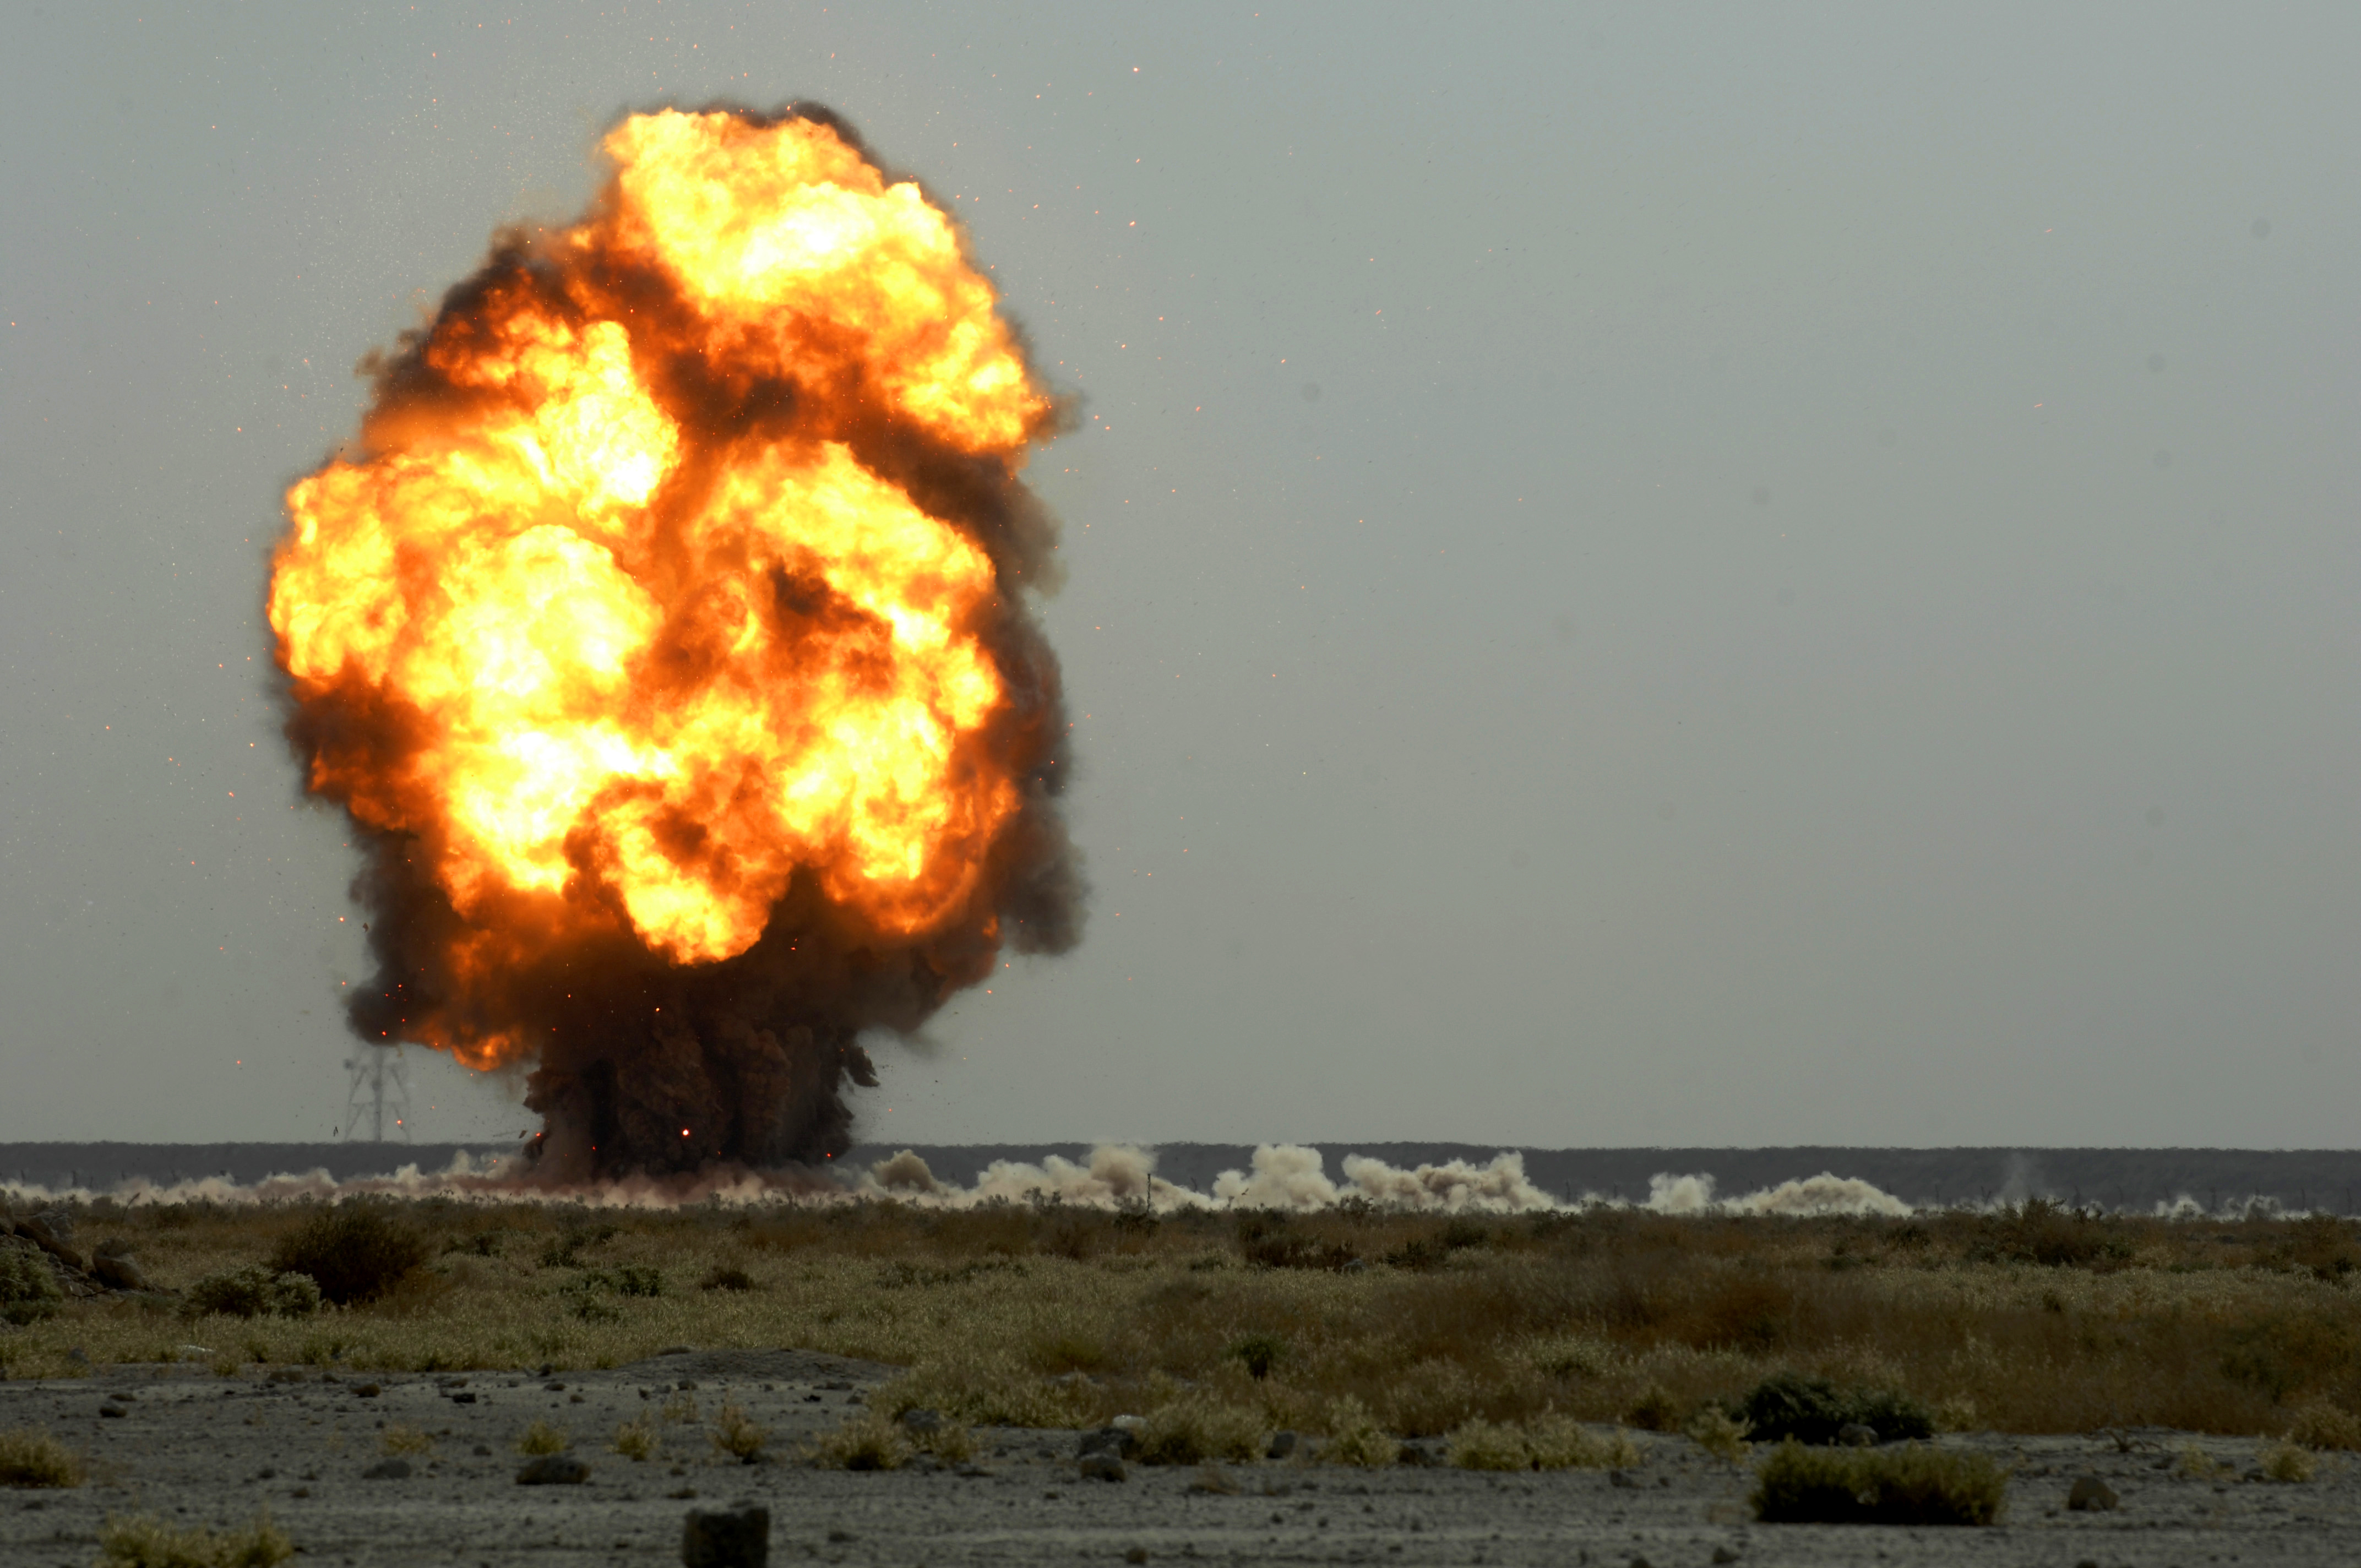 Free, Public Domain Image: Munitions Explosion